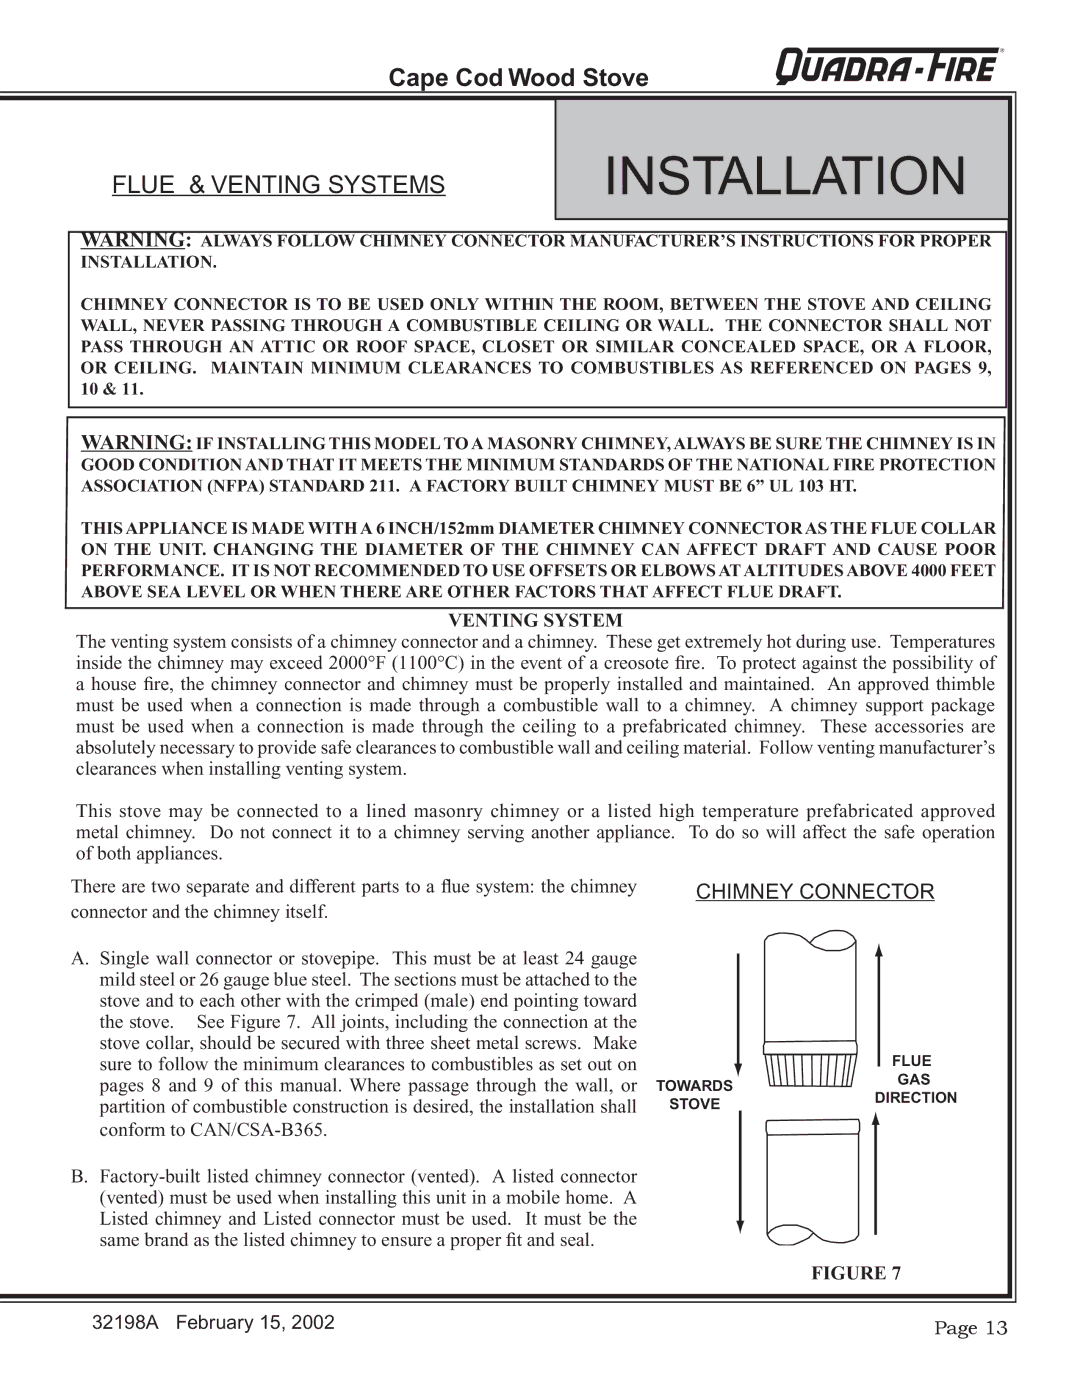 Quadra-Fire 32198A installation instructions Flue & Venting Systems 